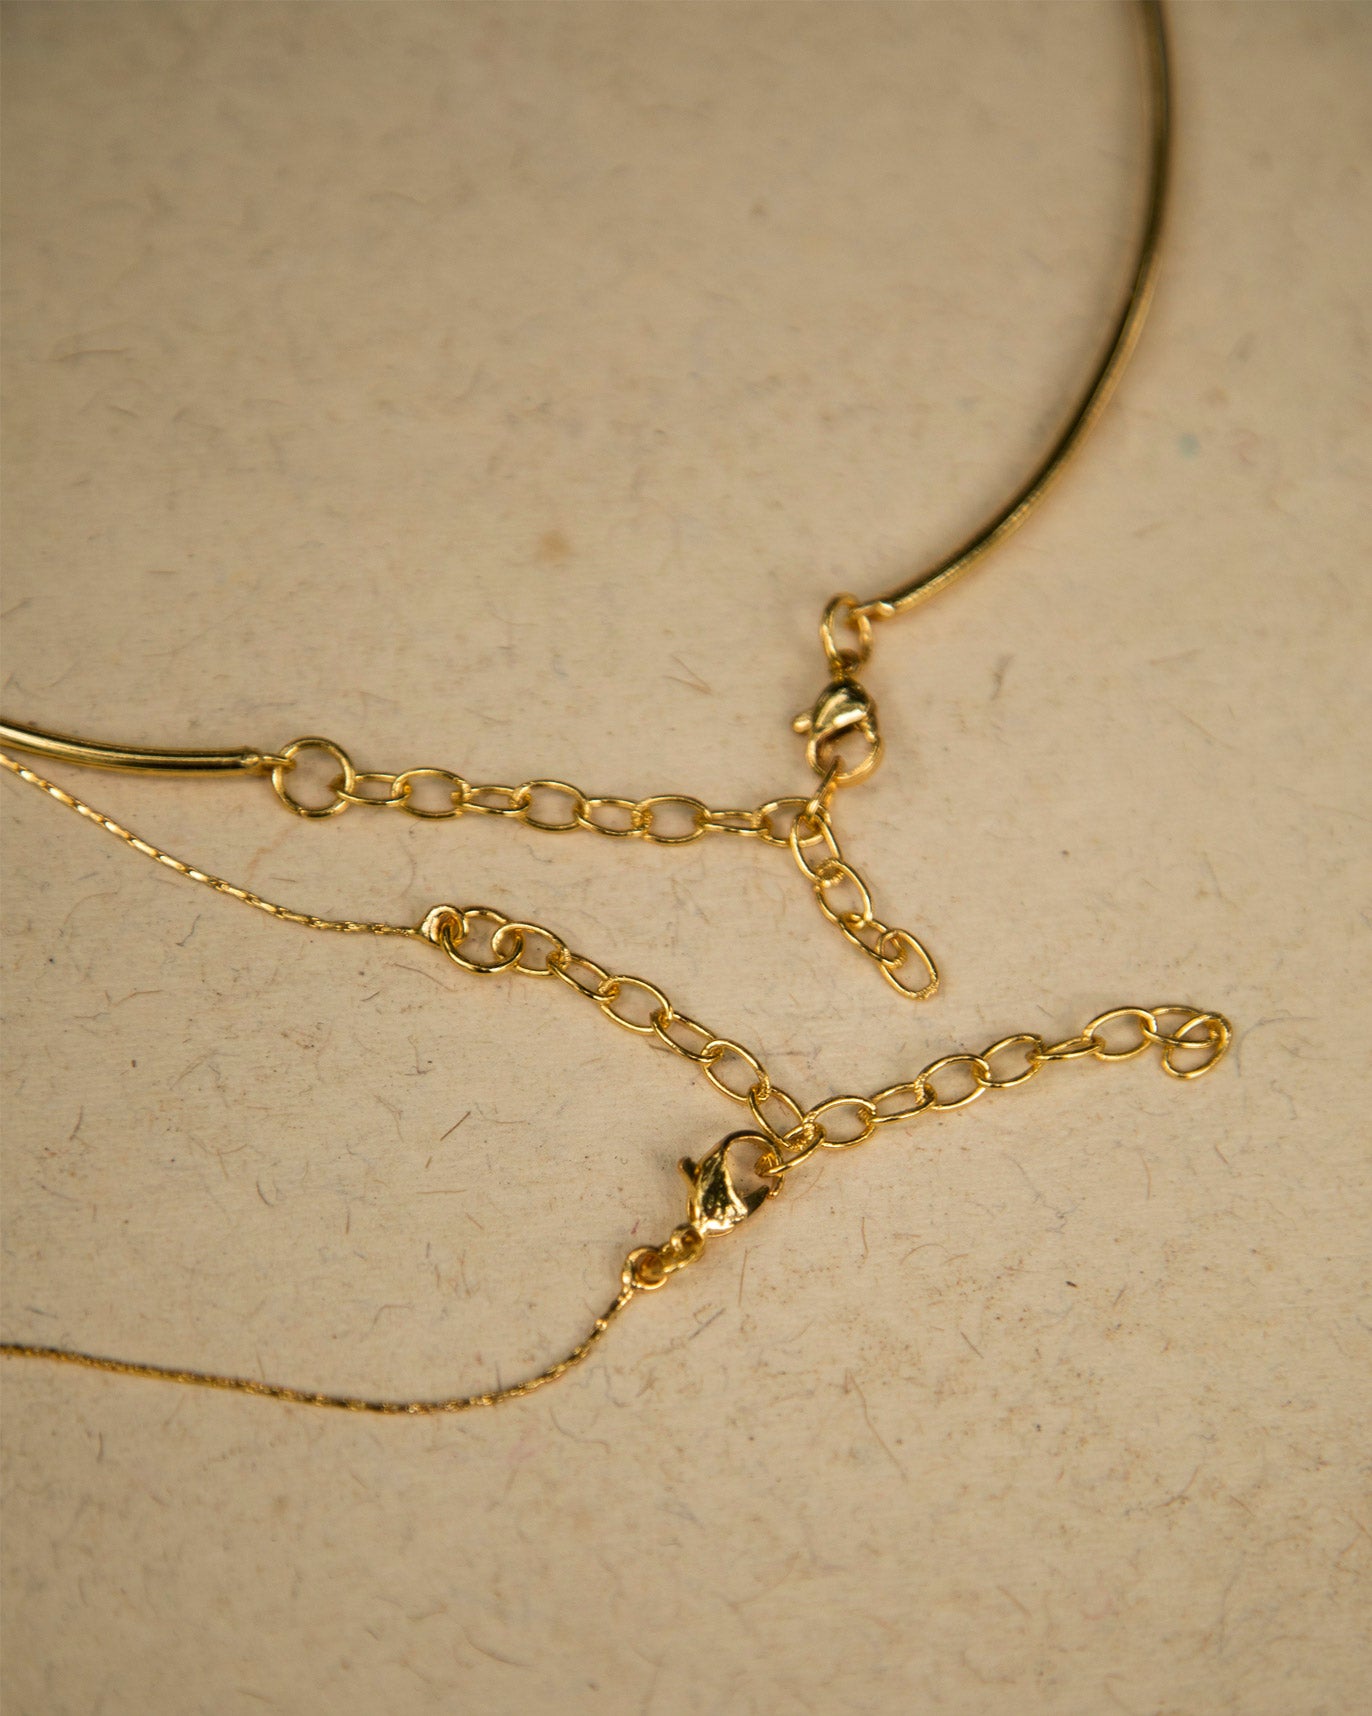 Jalrani Necklace - Gold